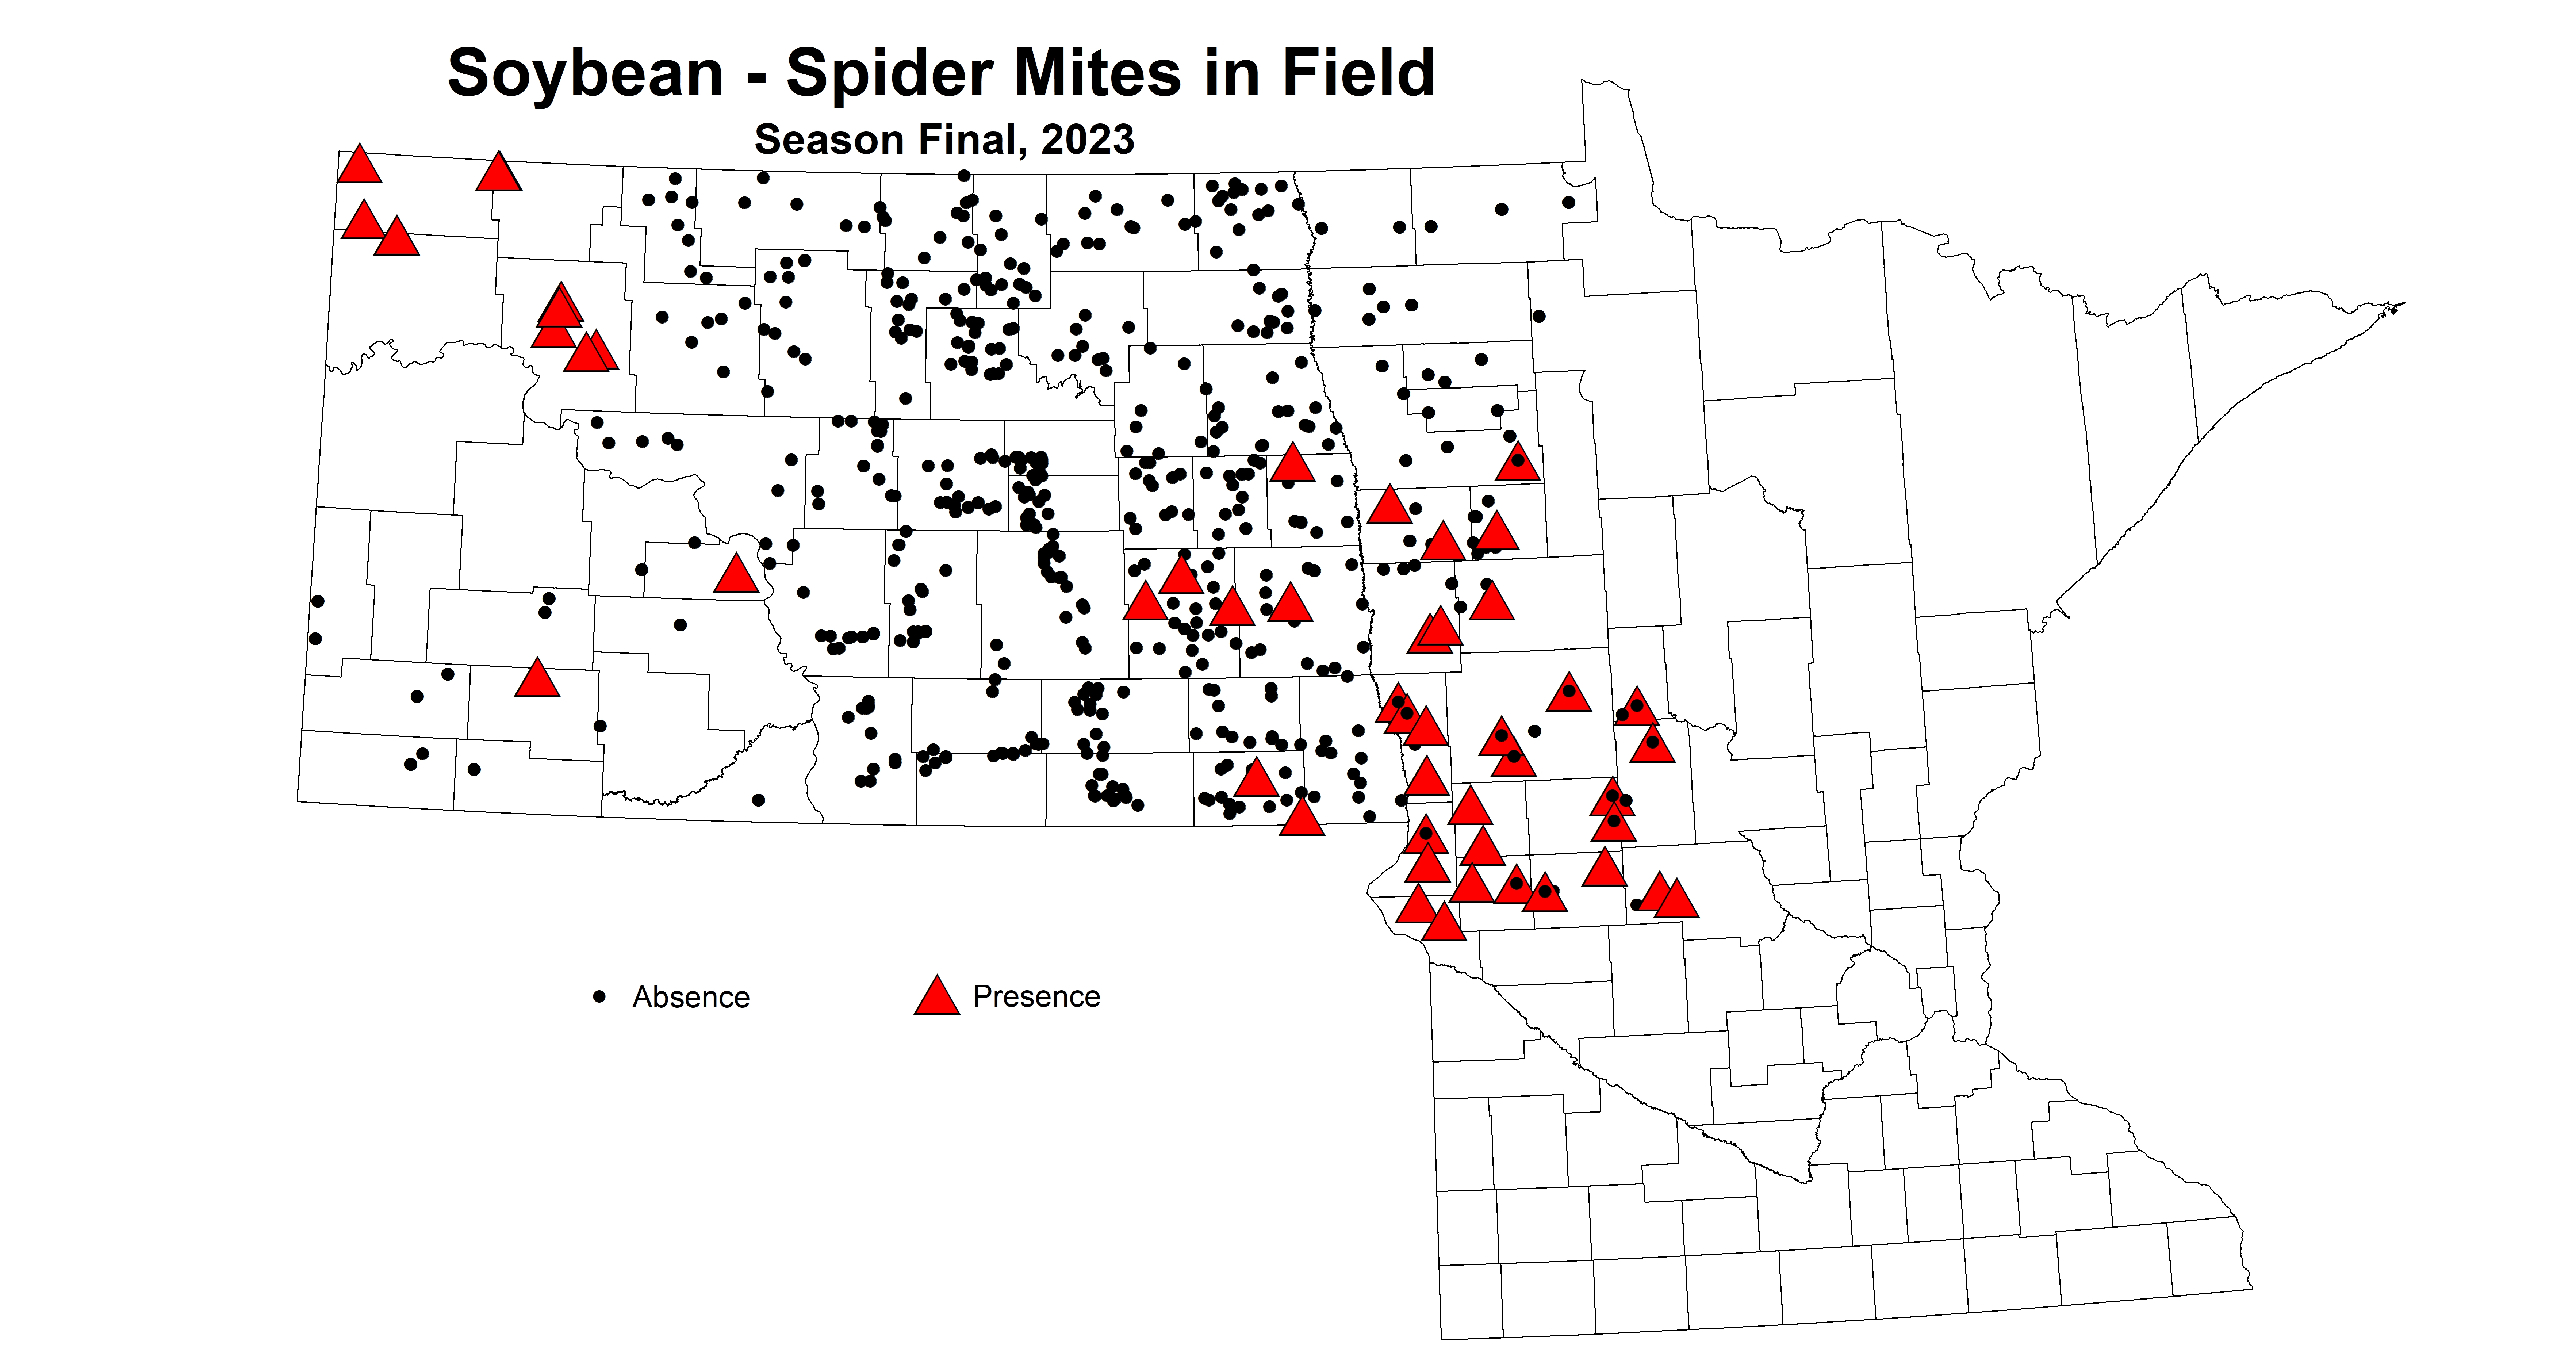 soybean spider mites in field season final 2023